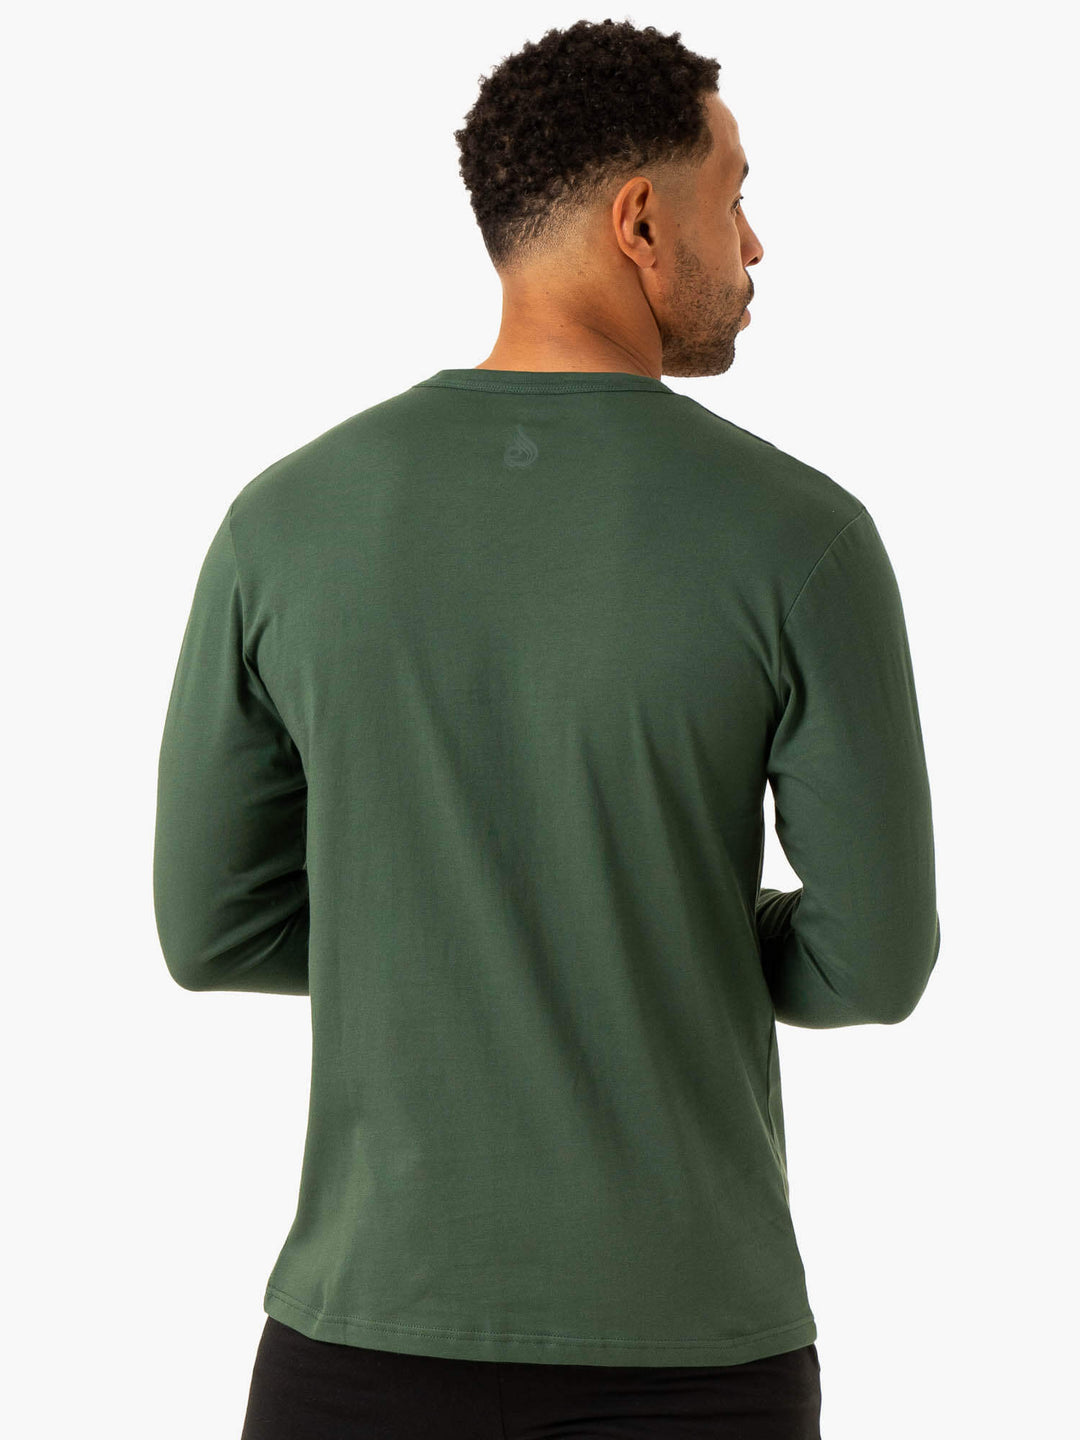 Graphic Long Sleeve T-Shirt - Dark Green Clothing Ryderwear 